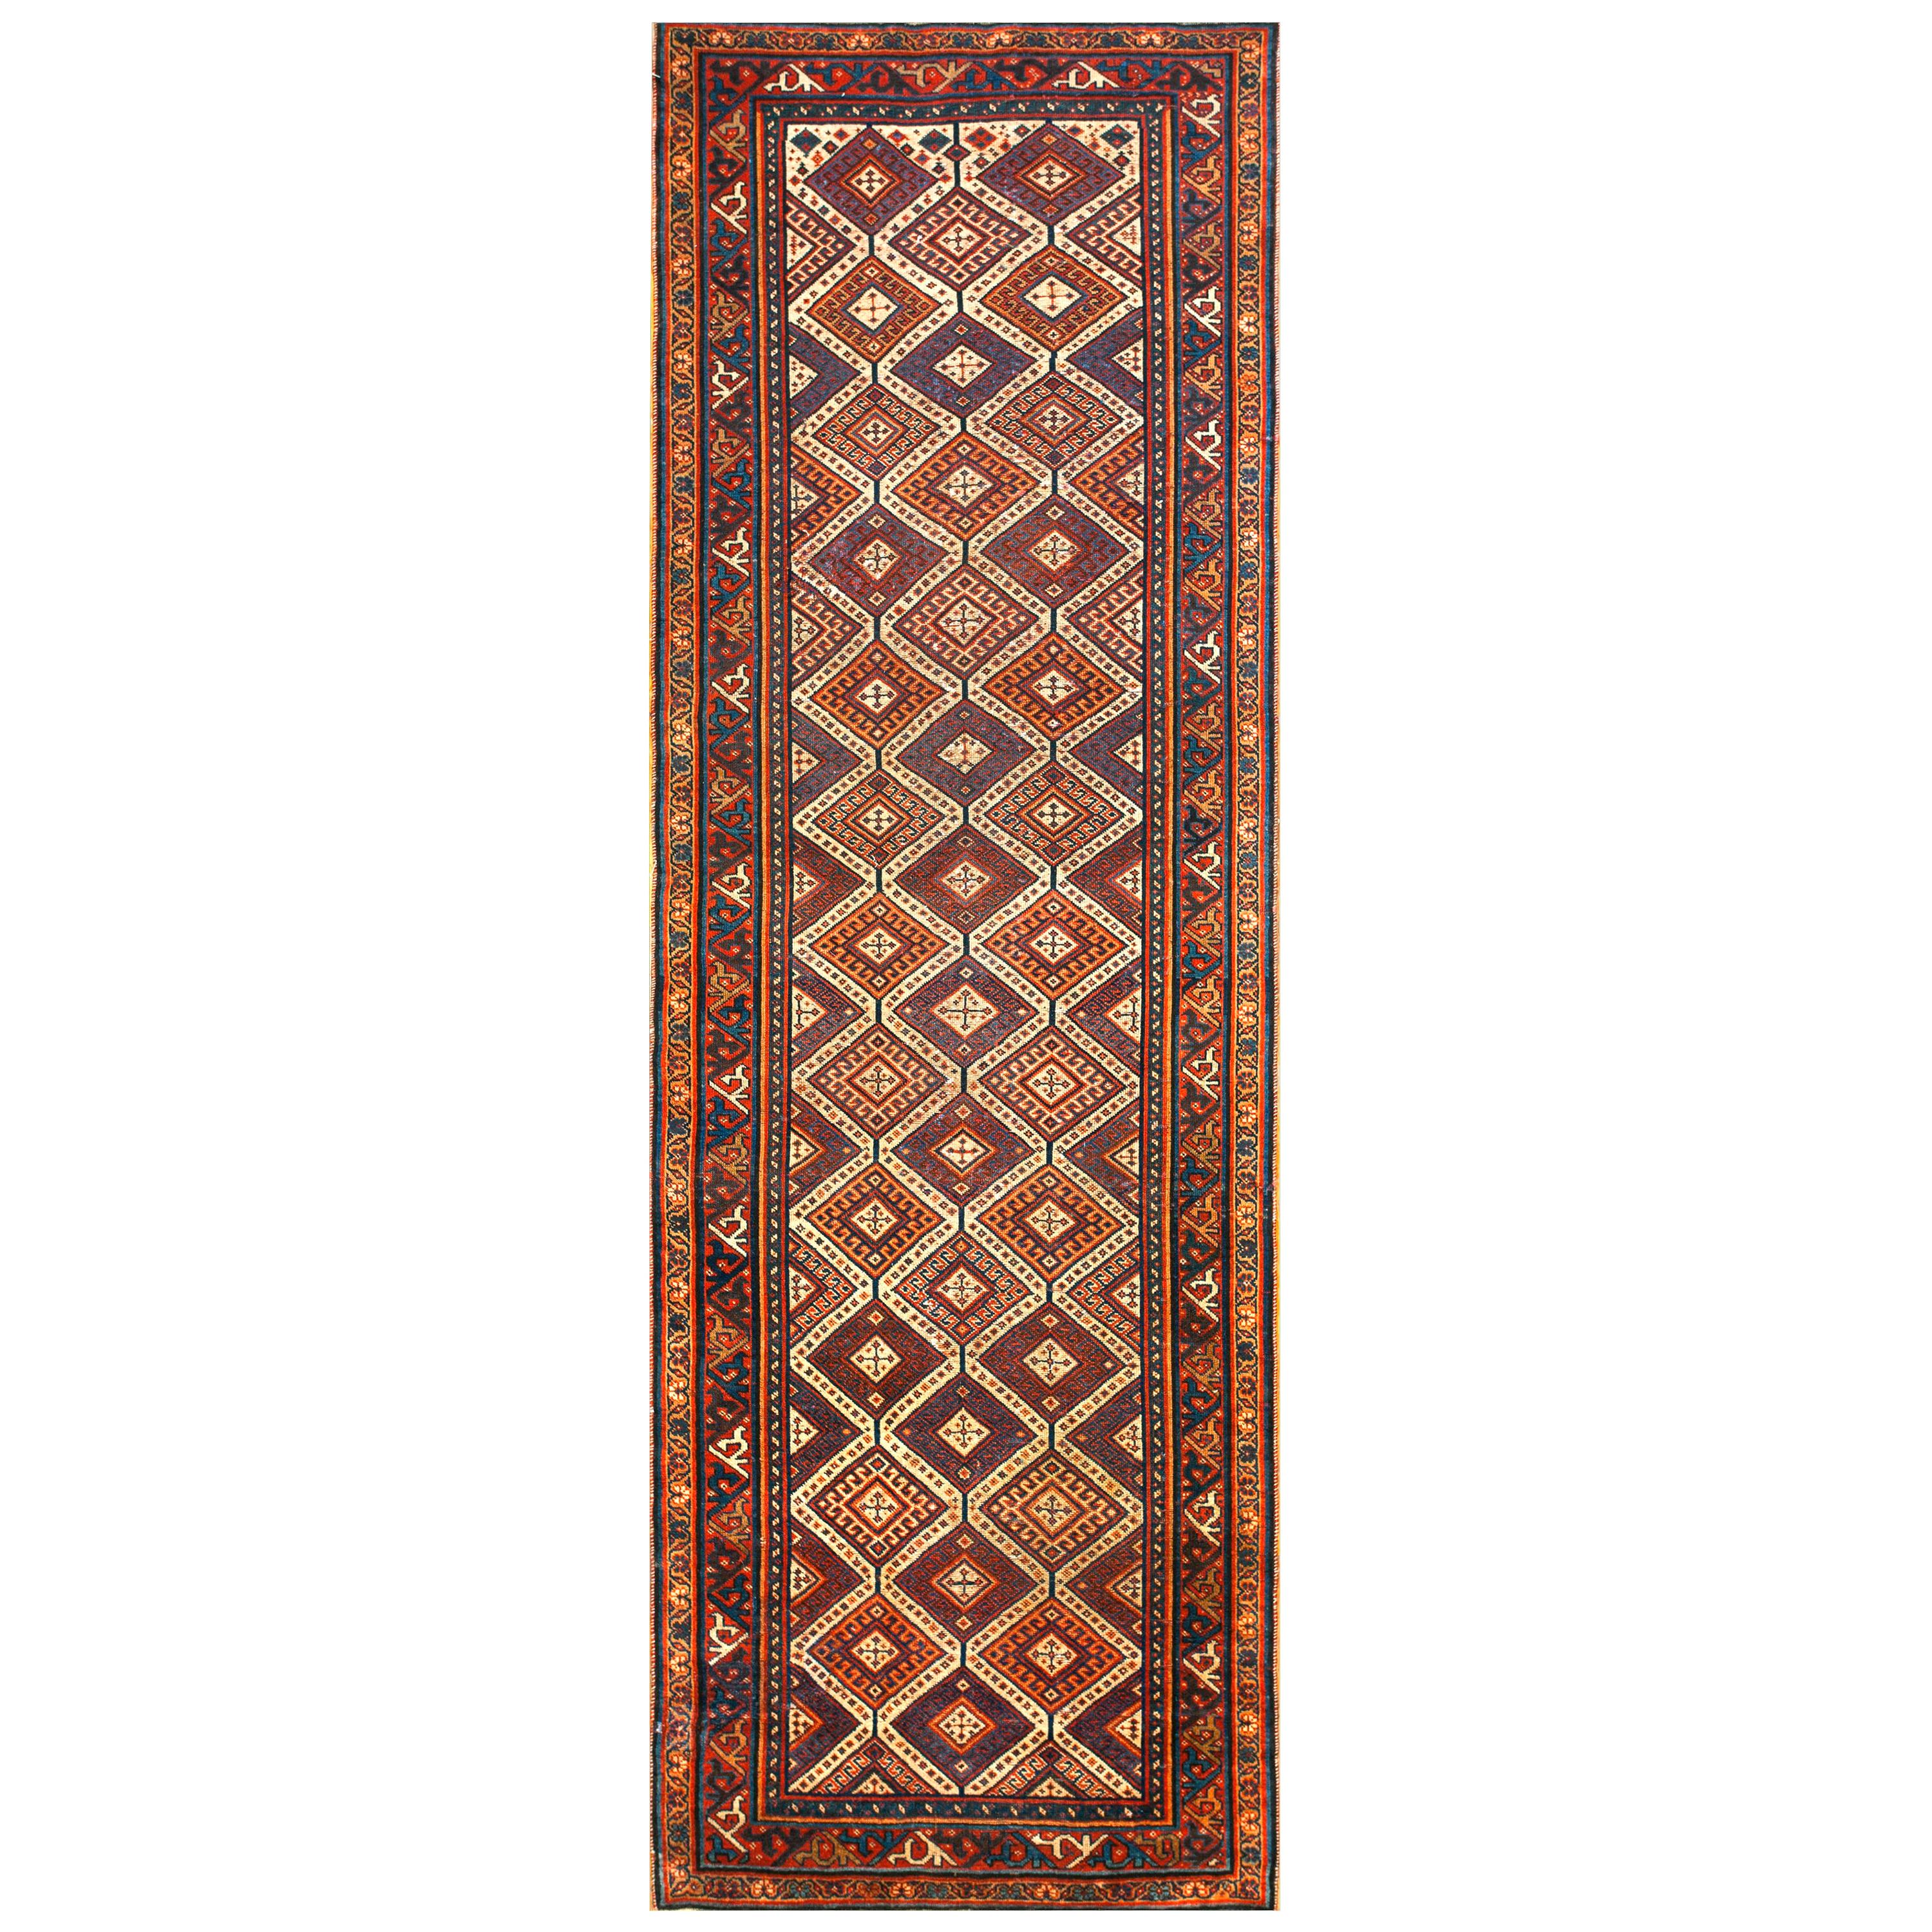 Late 19th Century Persian Afshar Carpet ( 4' x 12'2" - 122 x 370 )